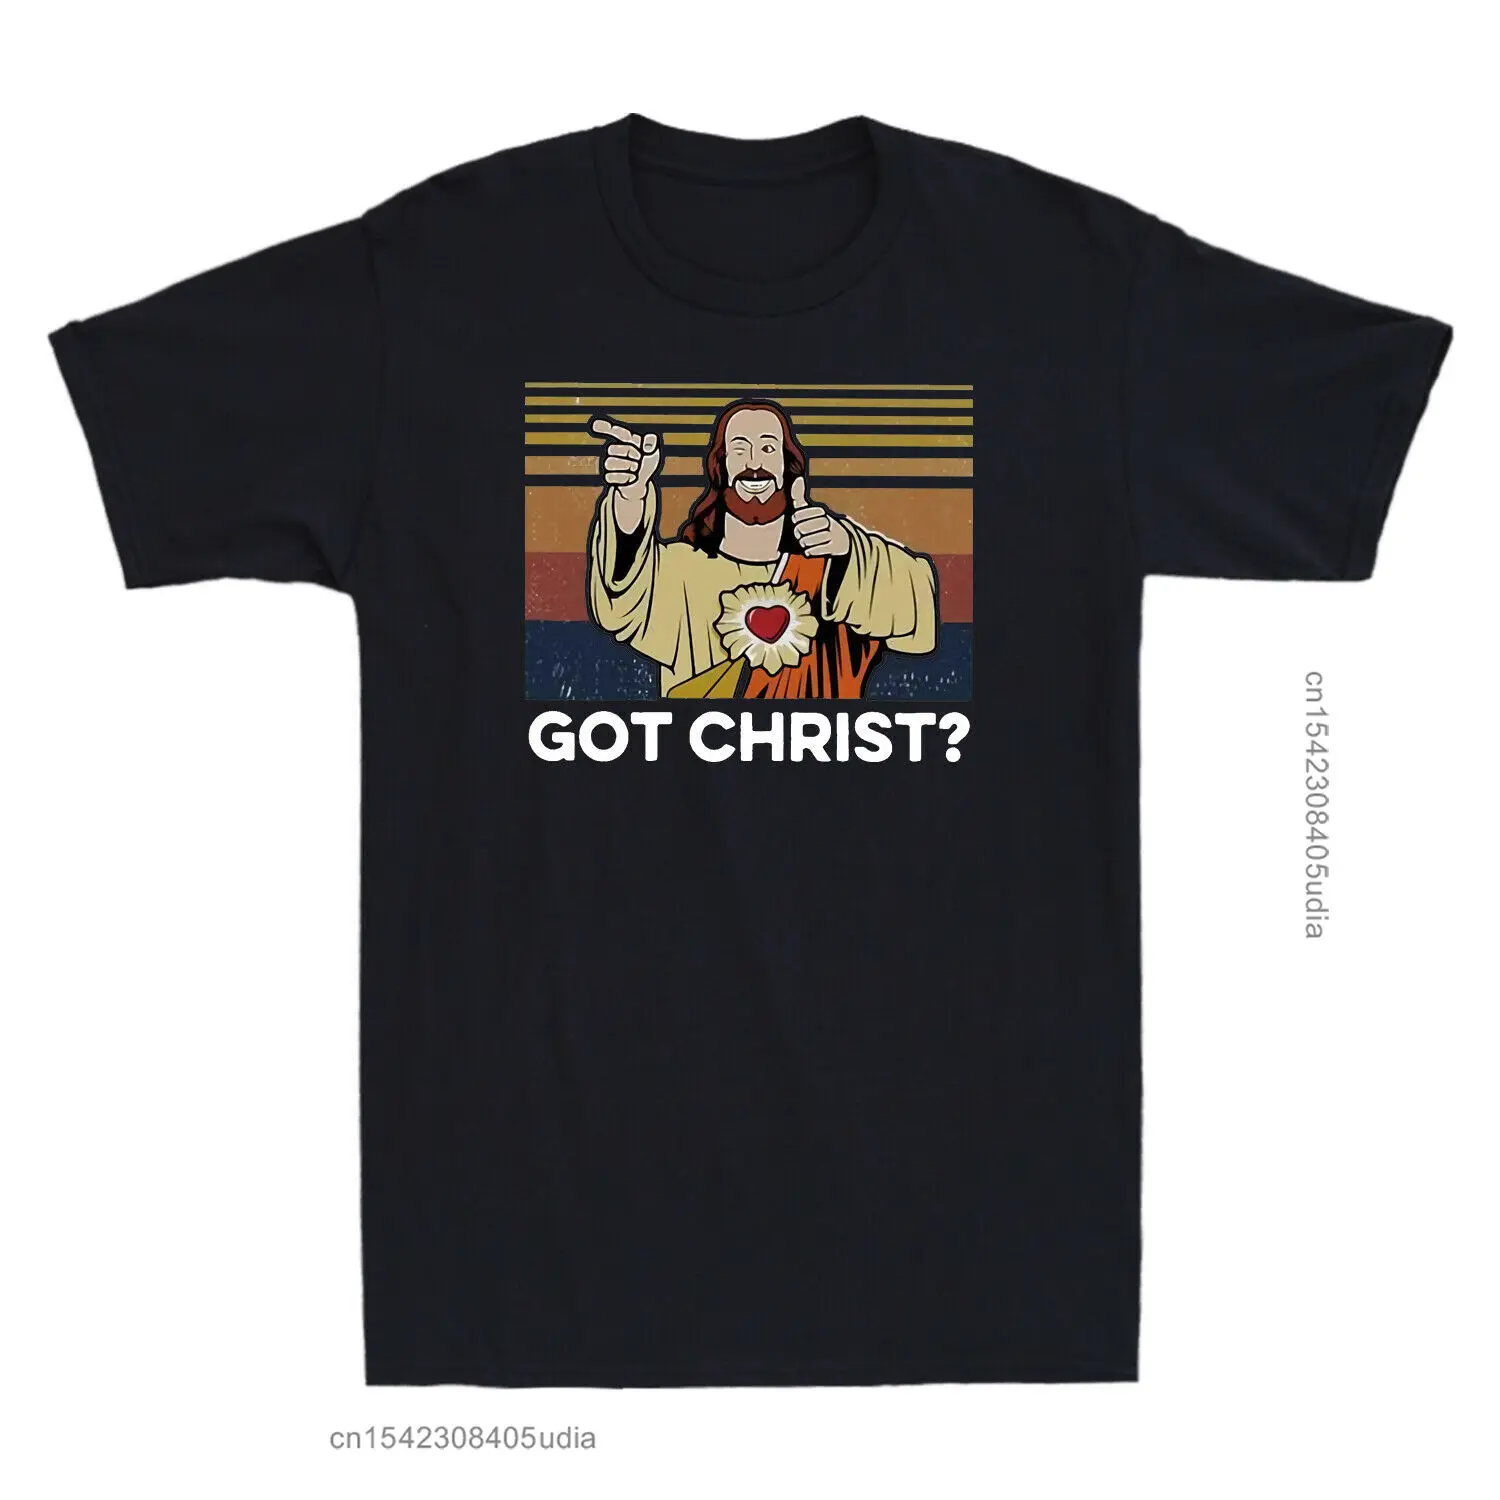 Got Christ? Jesus Buddy Christ Comedy Movie Men's T-Shirts Cotton Black Tees T Shirt Women Men Harajuku Ullzang T-Shirts Male